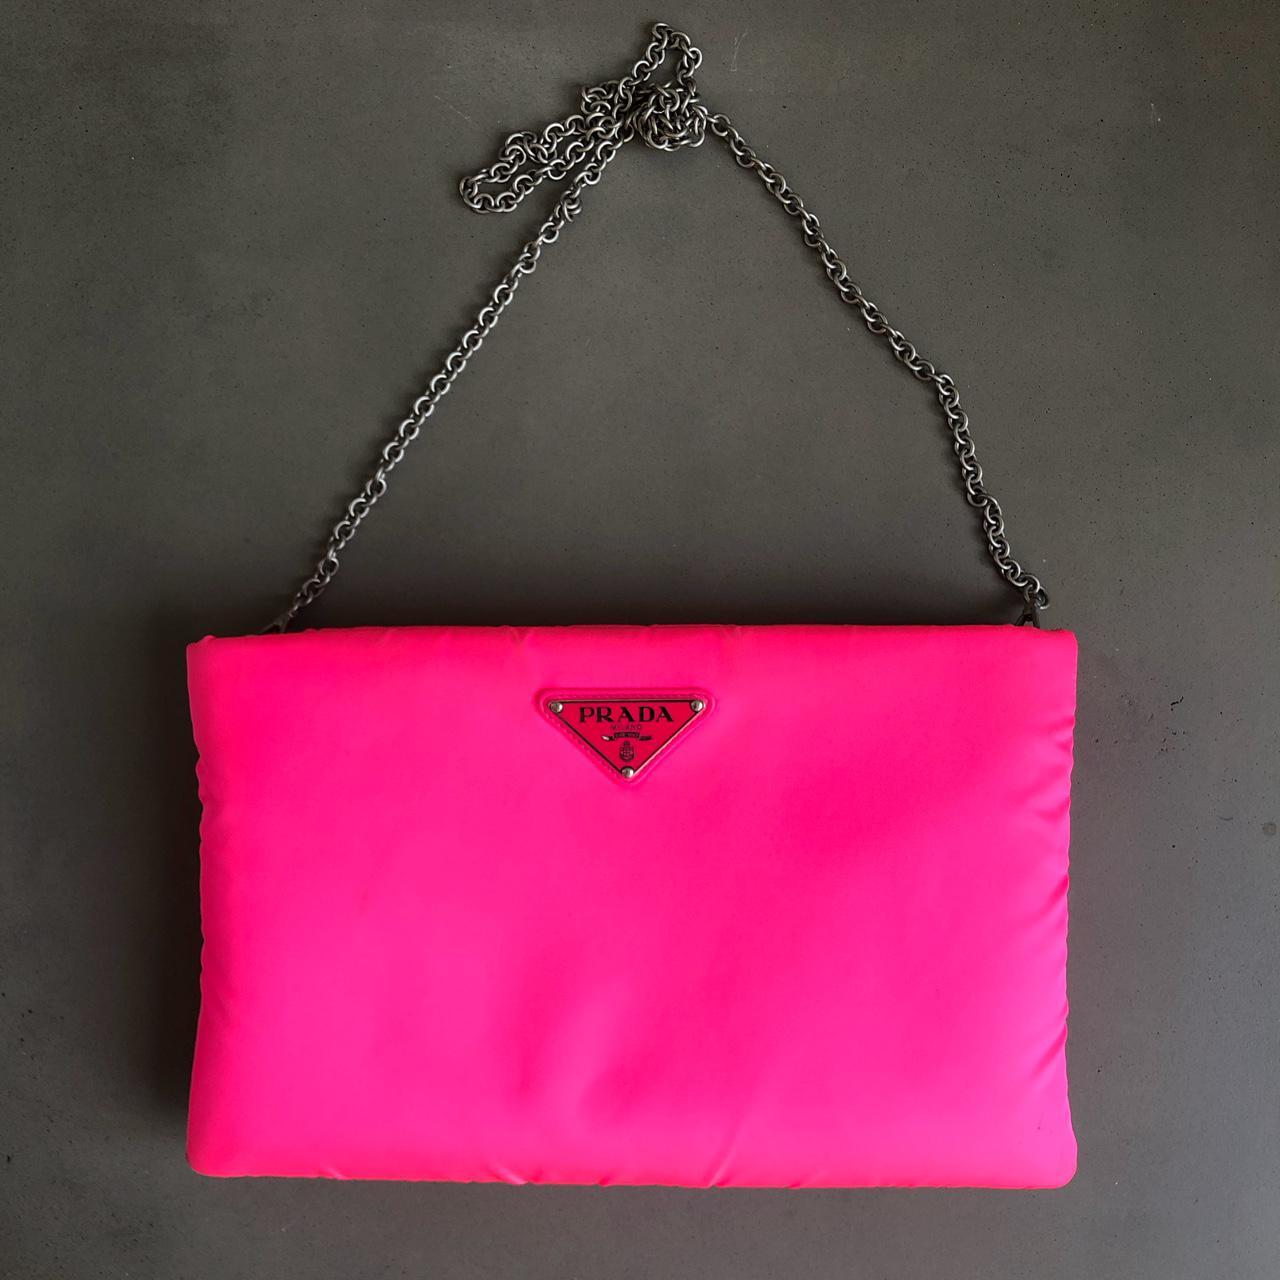 Prada Tessuto Nylon Tote Bag in Bright Pink